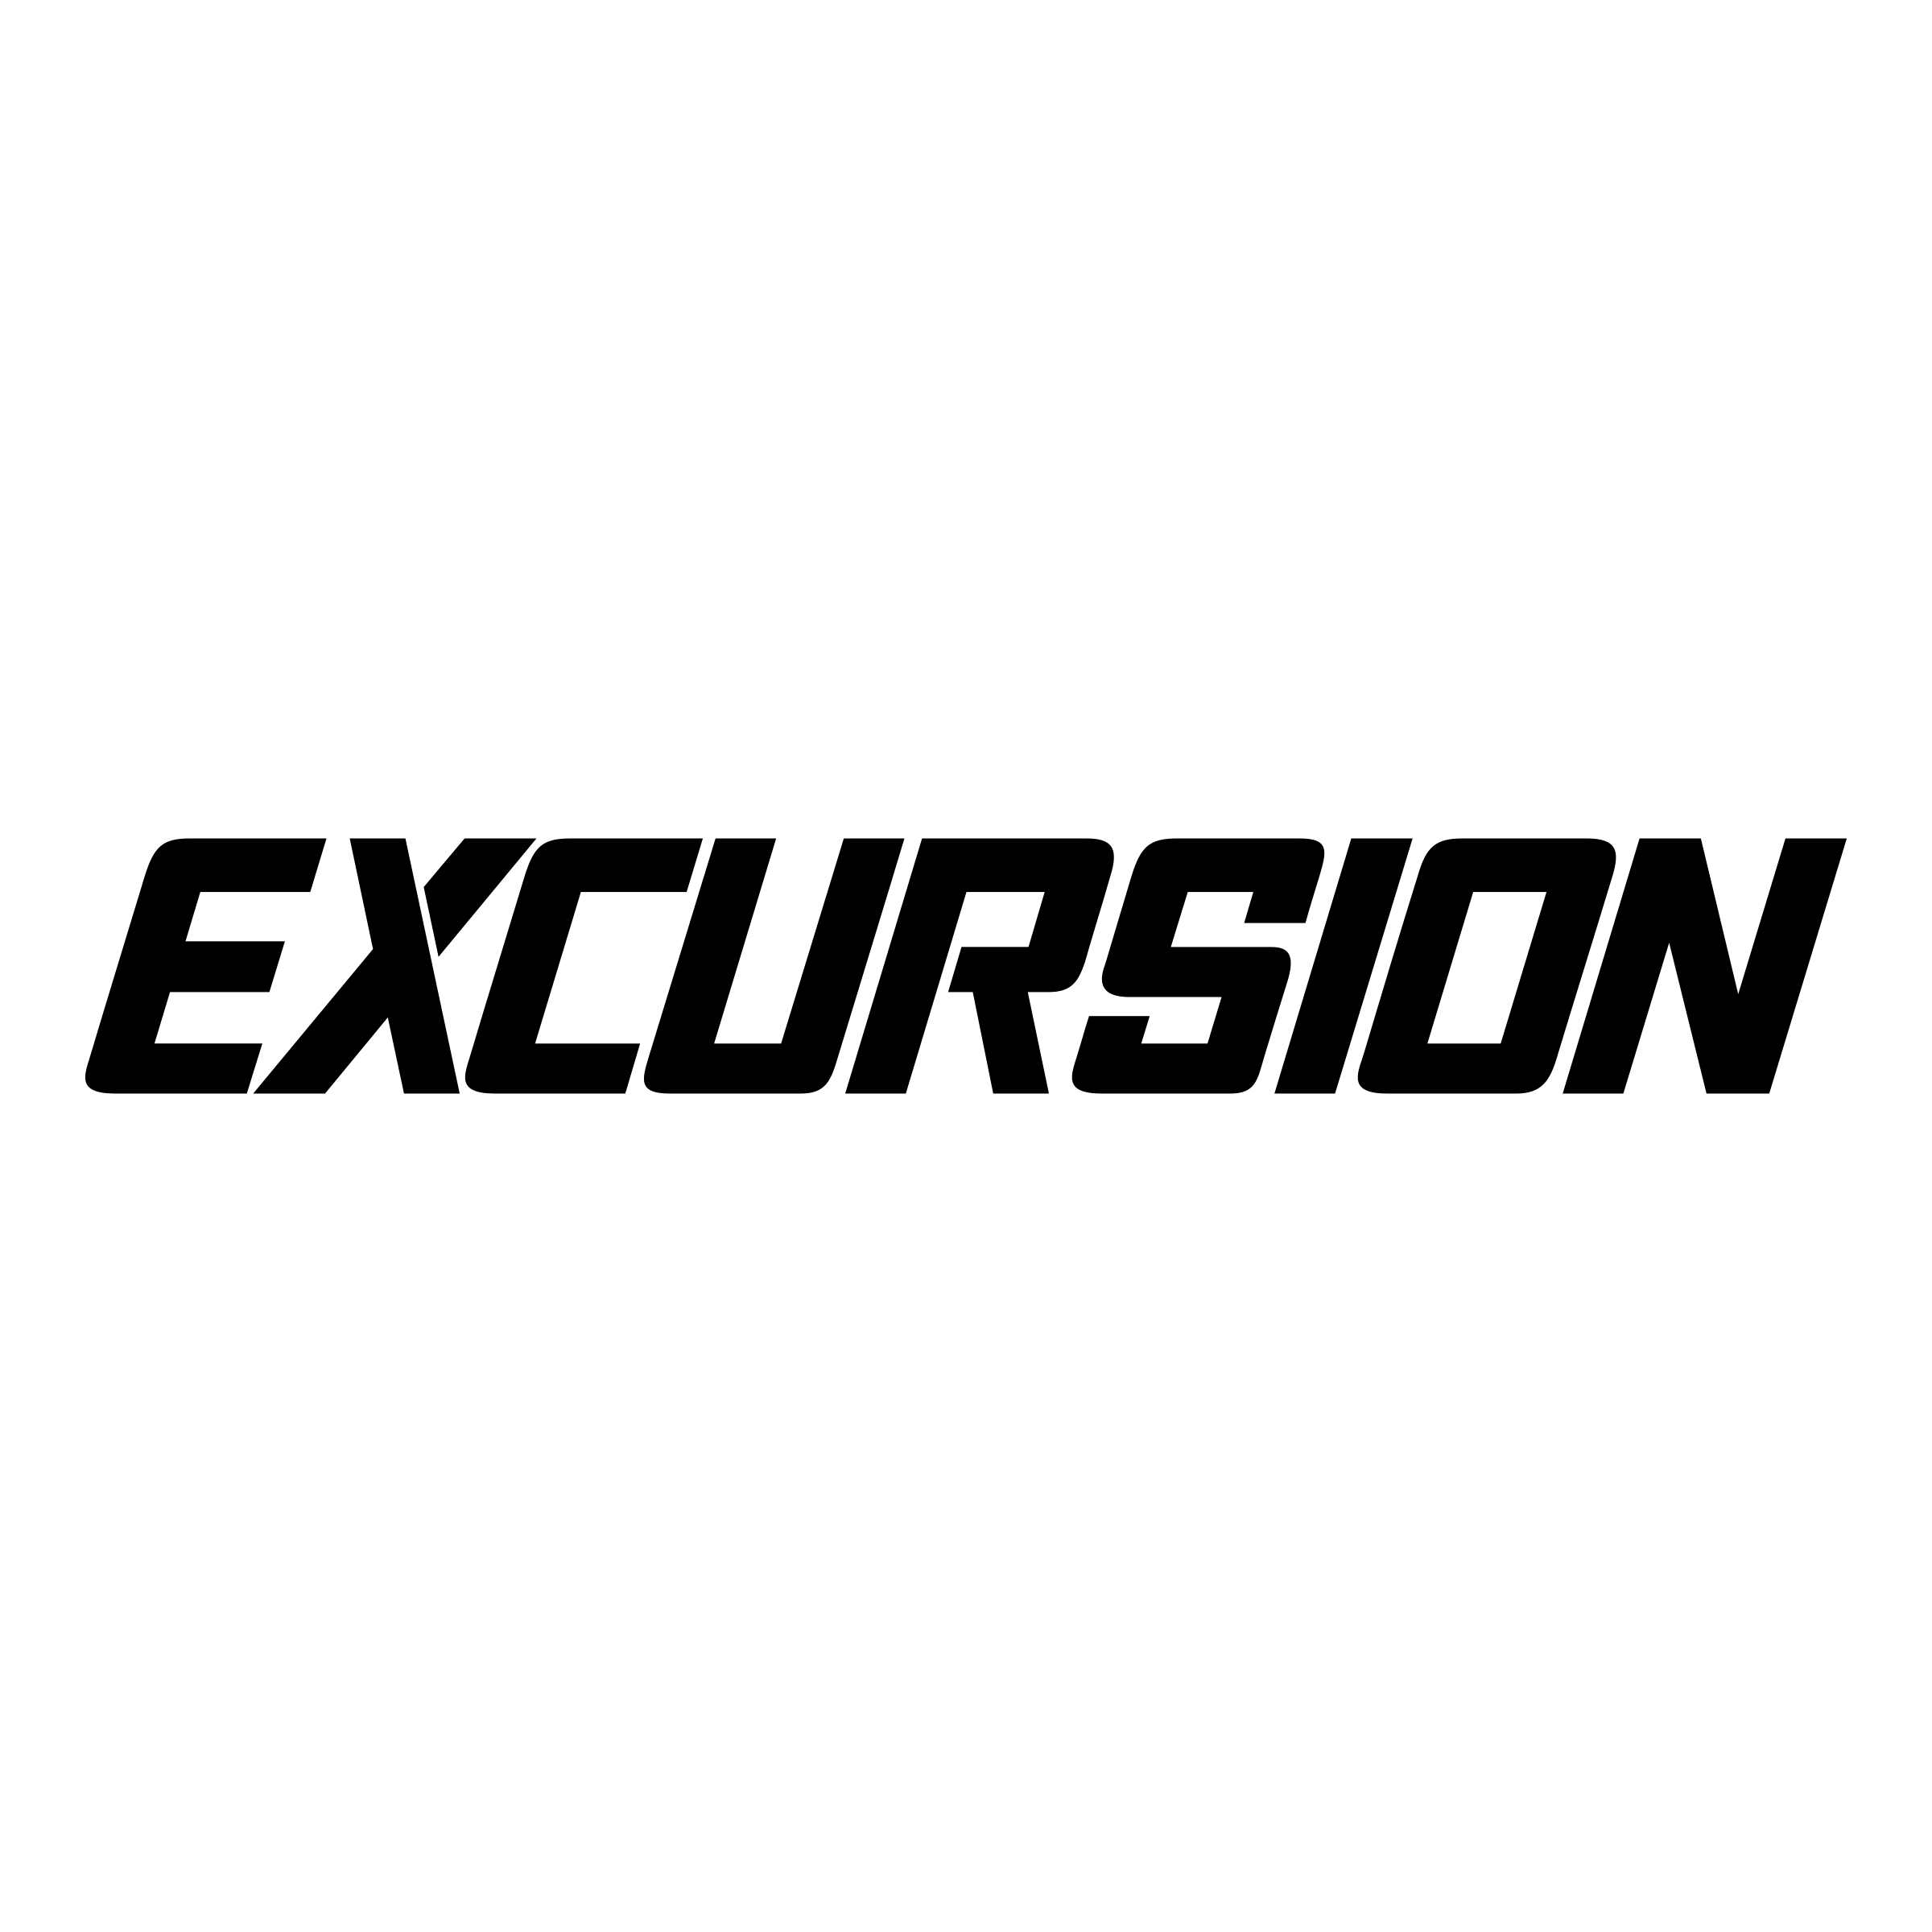 Excursion Logo - Excursion Logo PNG Transparent & SVG Vector